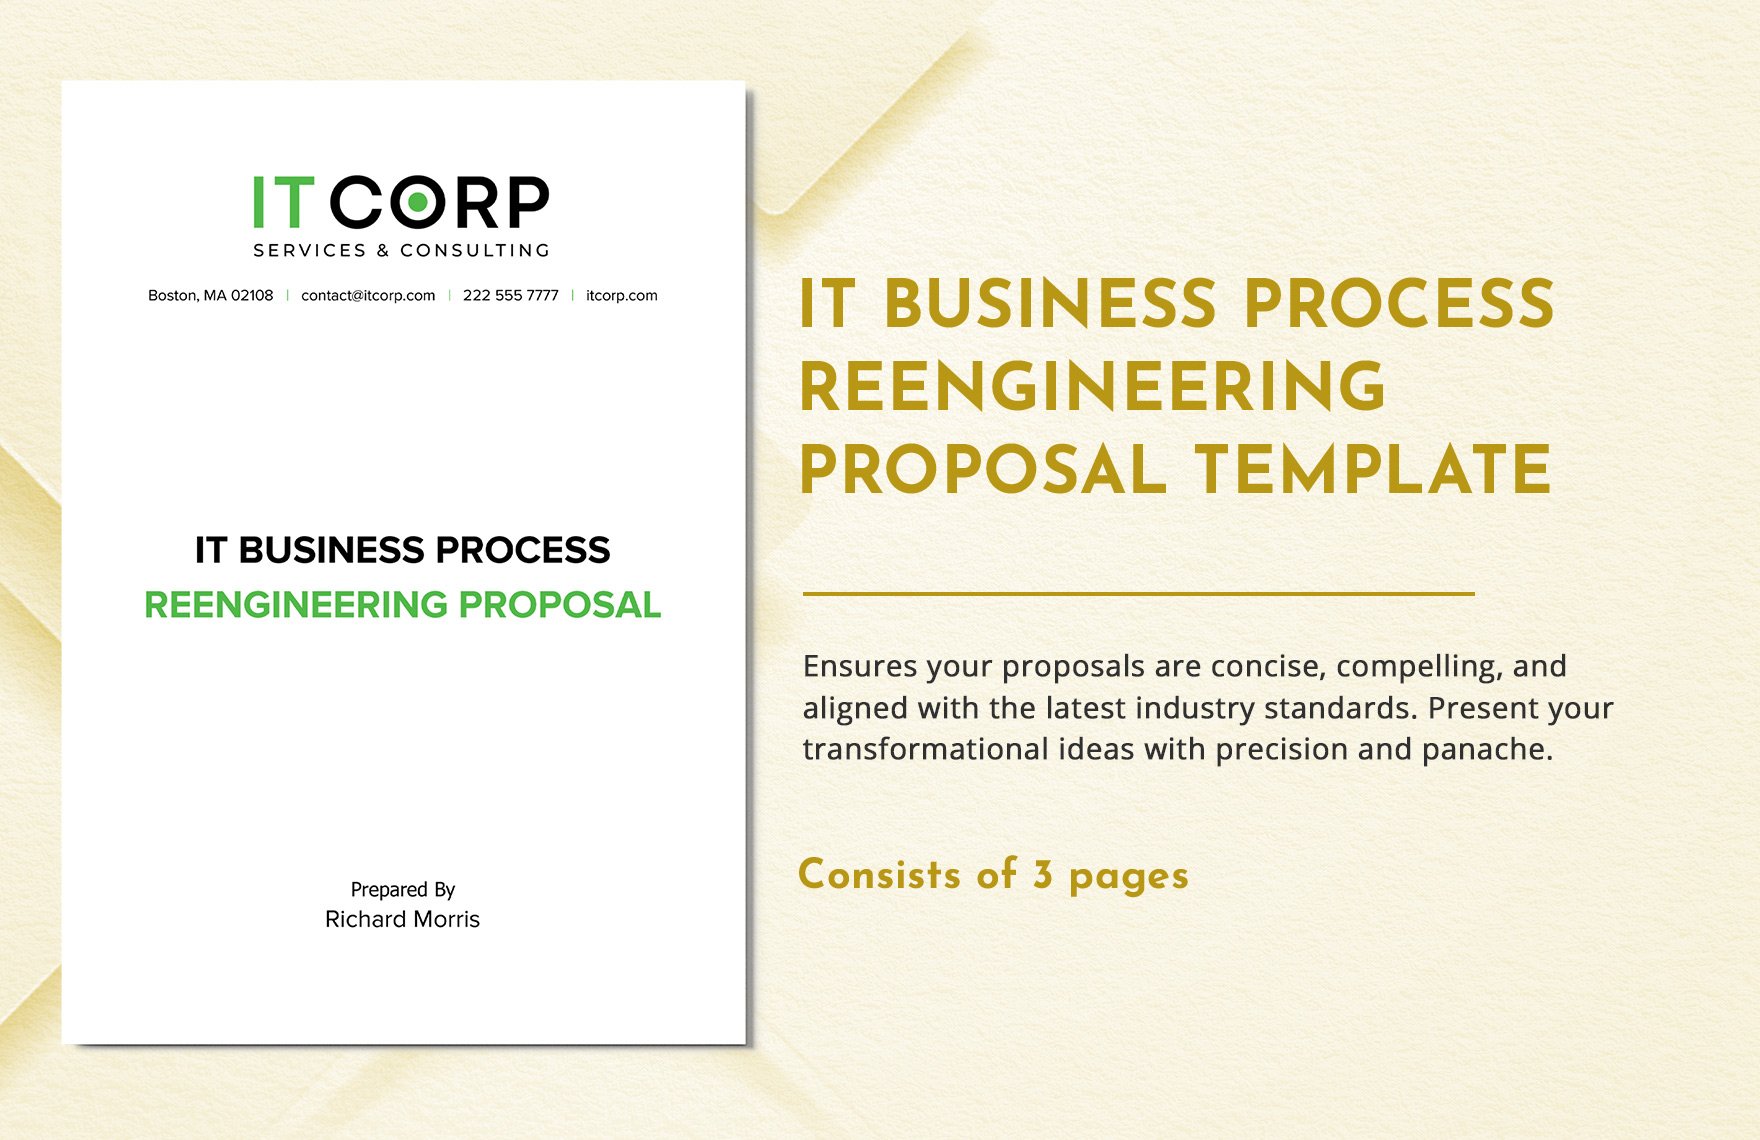 IT Business Process Reengineering Proposal Template